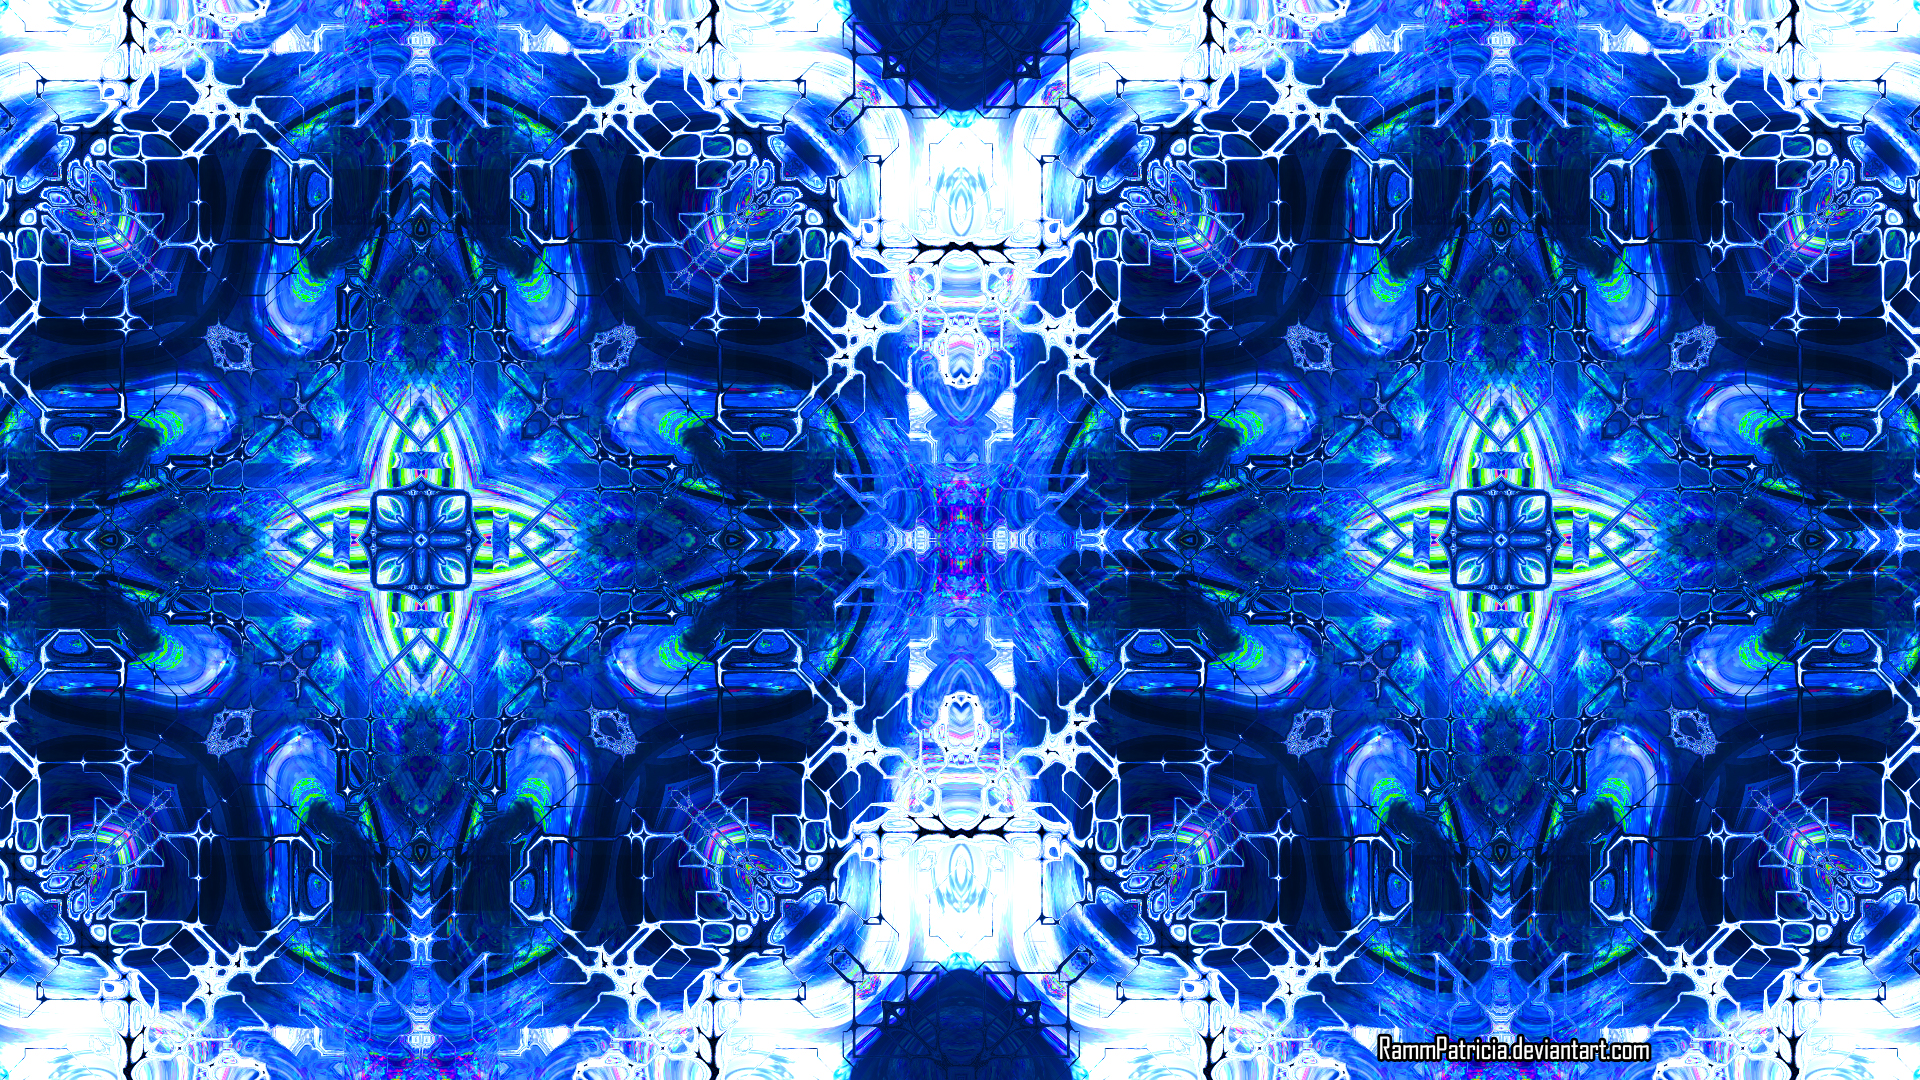 RammPatricia Digital Abstract Digital Art Science Fiction Watermarked Symmetry Kaleidoscope Technolo 1920x1080